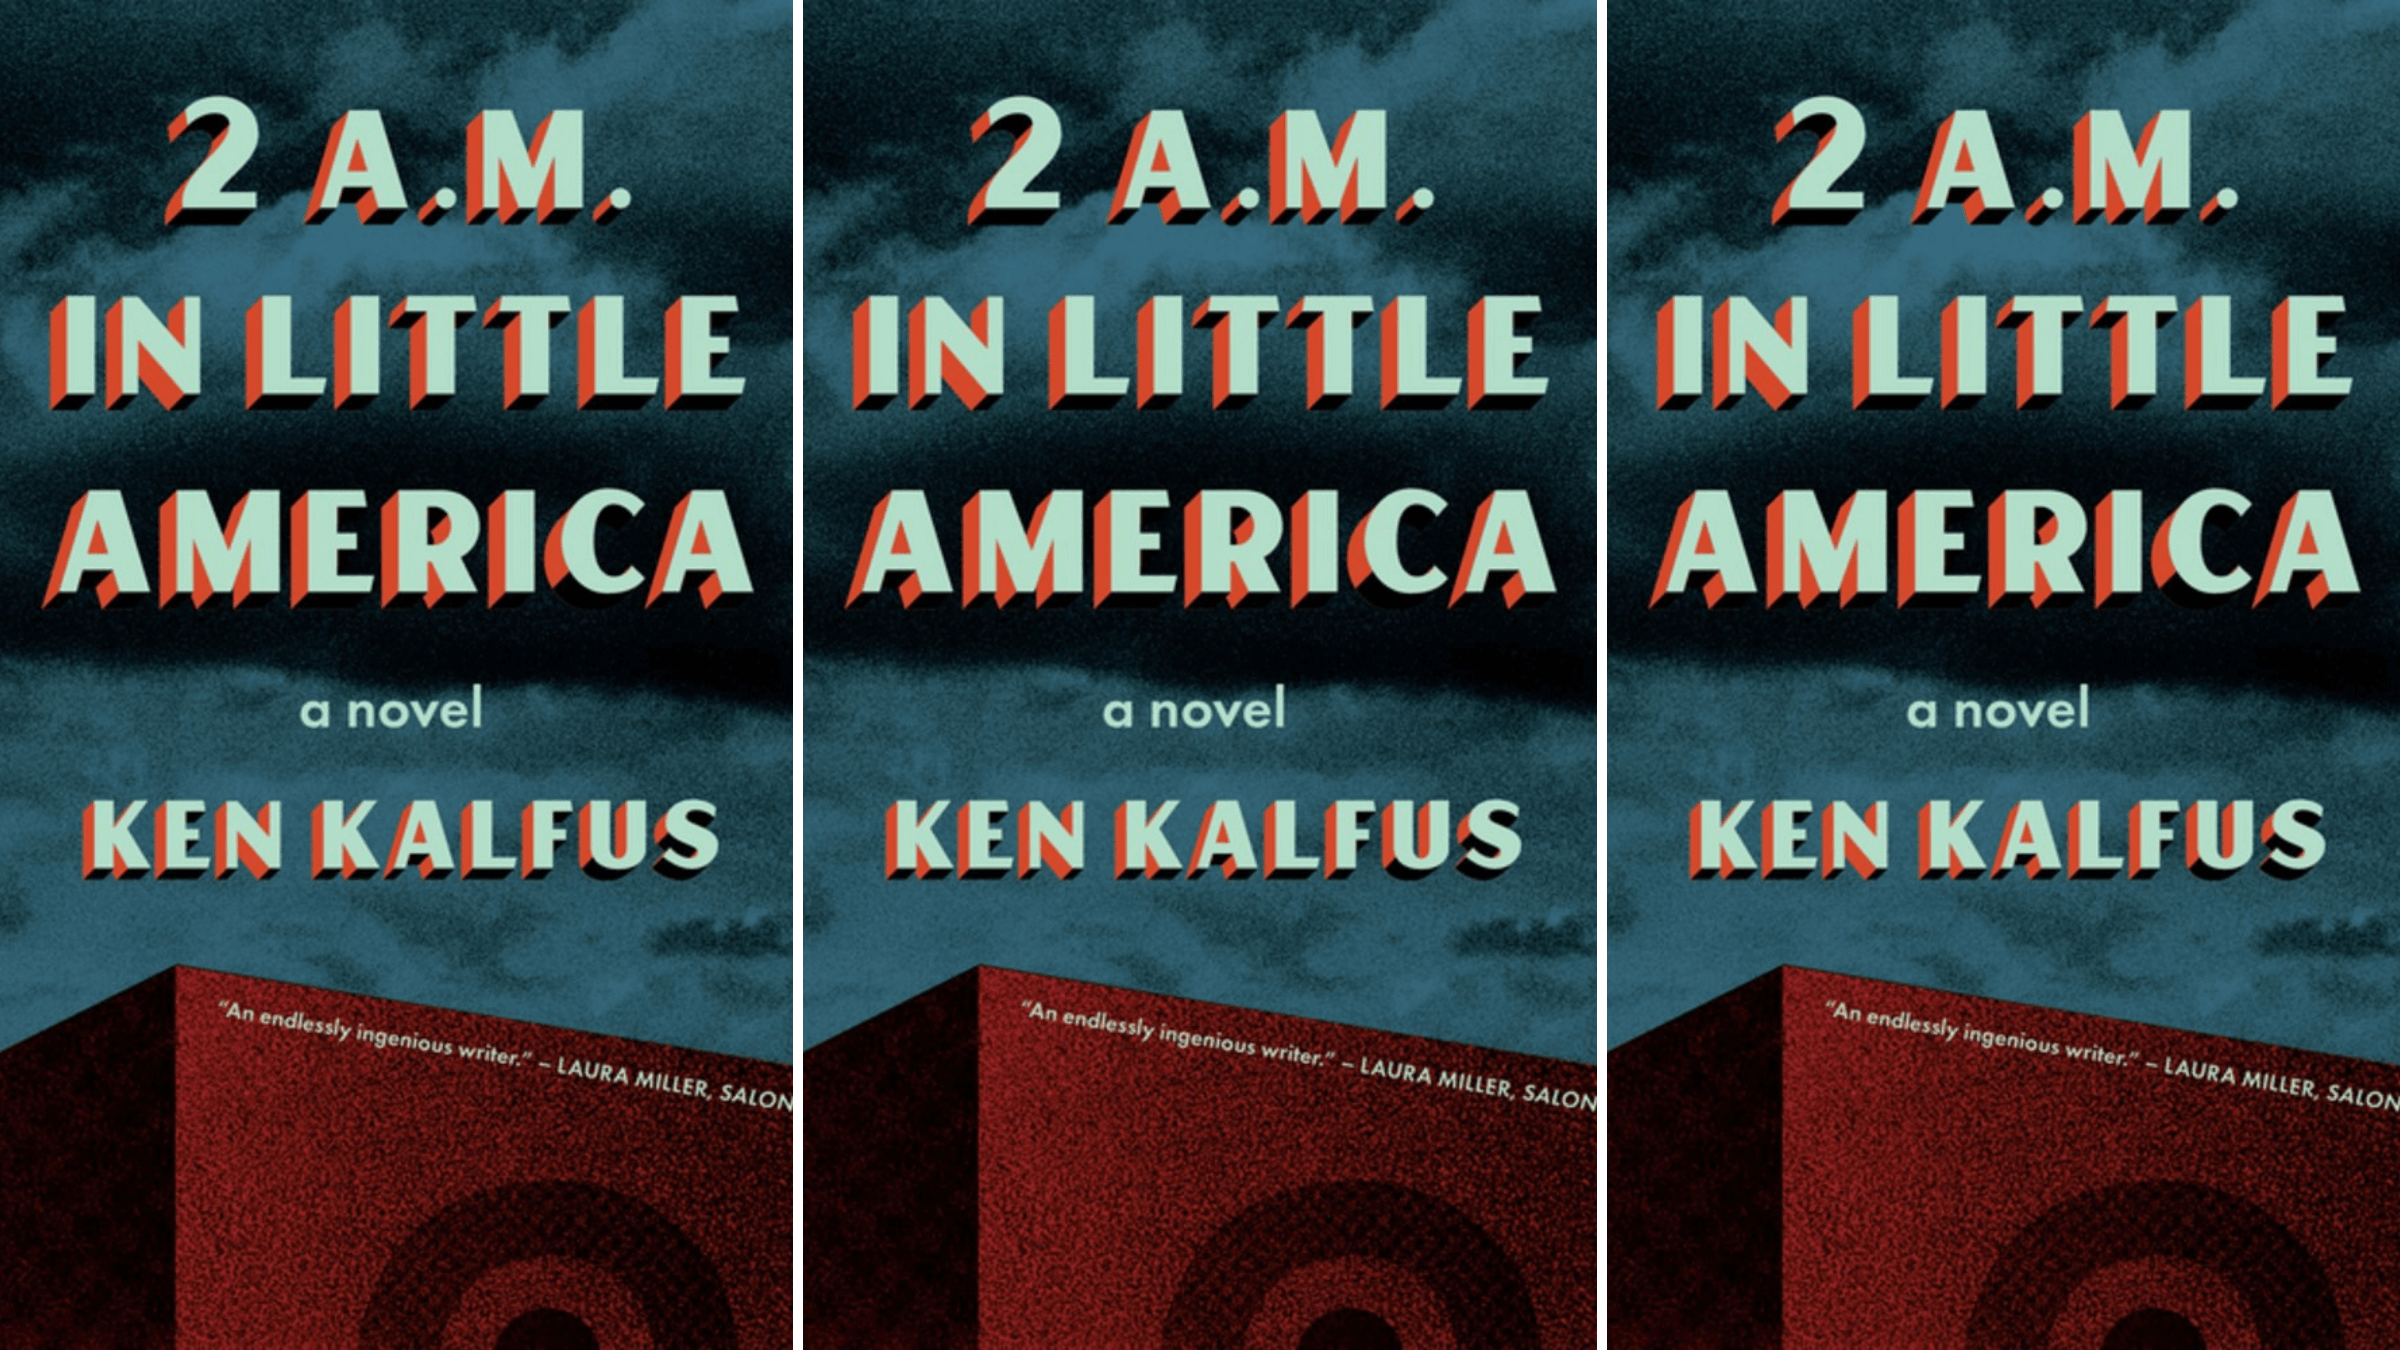 The cover of Ken Kalfus's novel "2 A.M. in Little America"